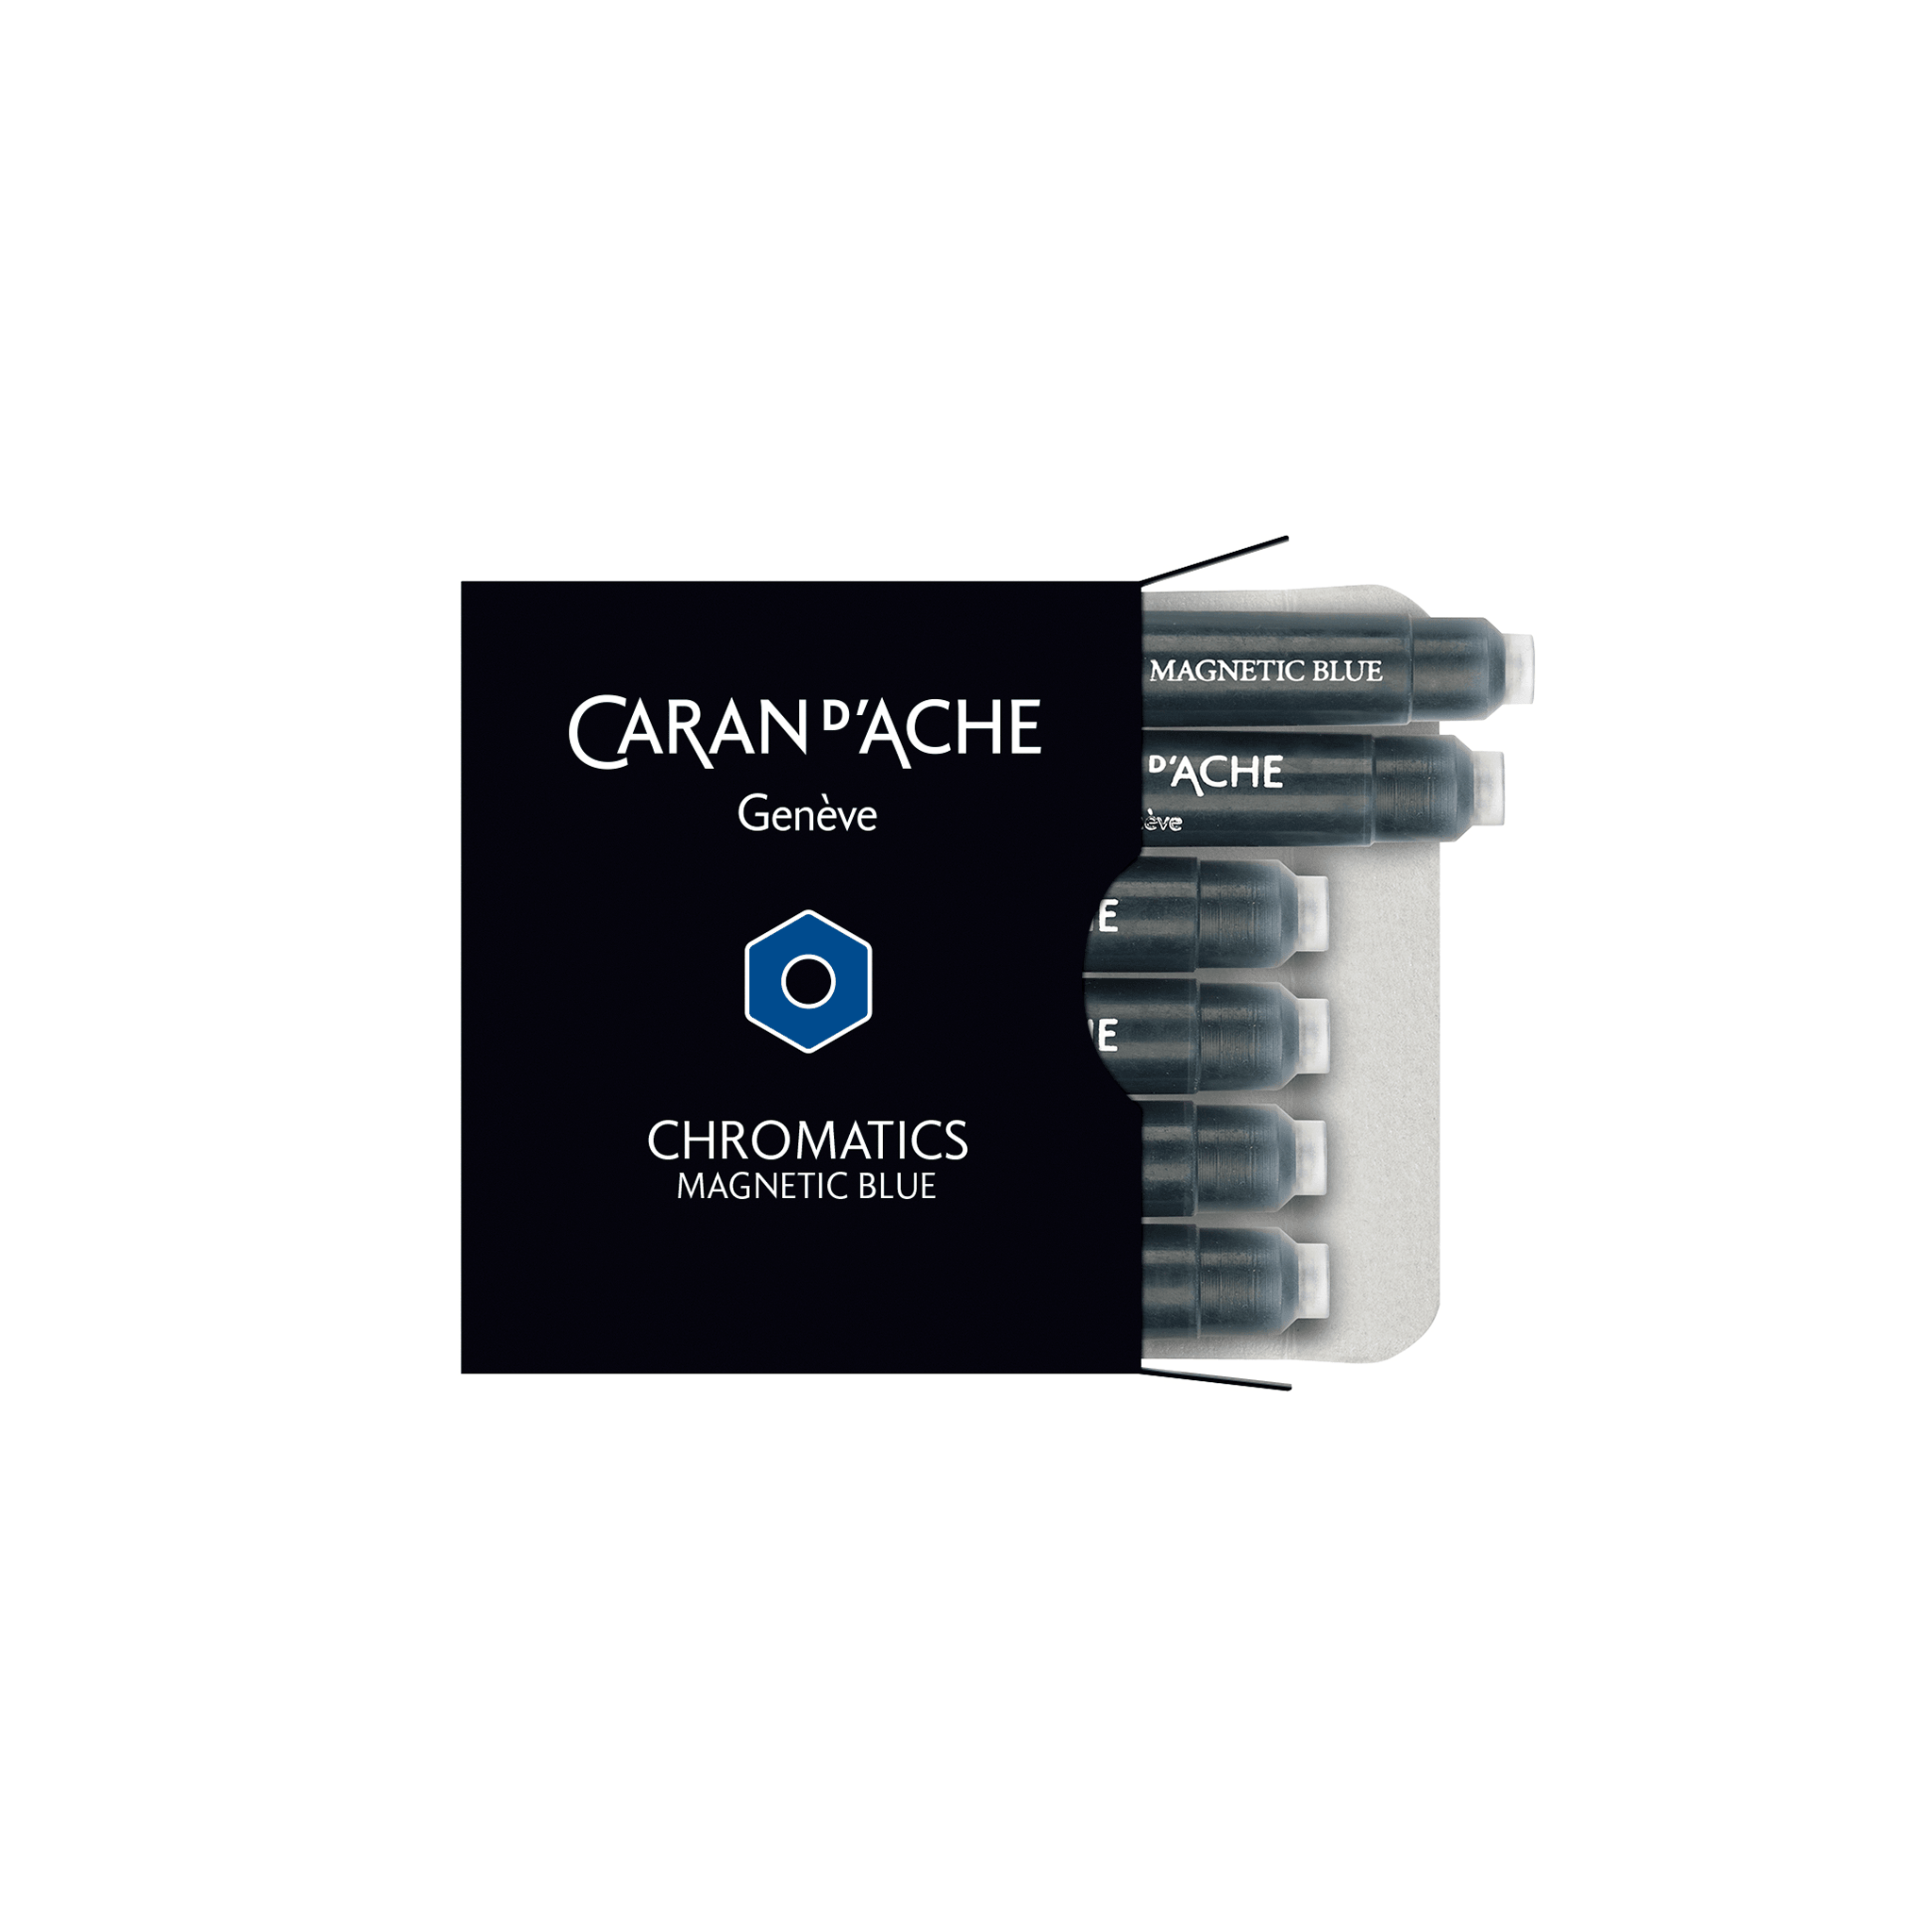 Caran d'Ache Chromatics Ink Cartridge Magnetic Blue - Laywine's